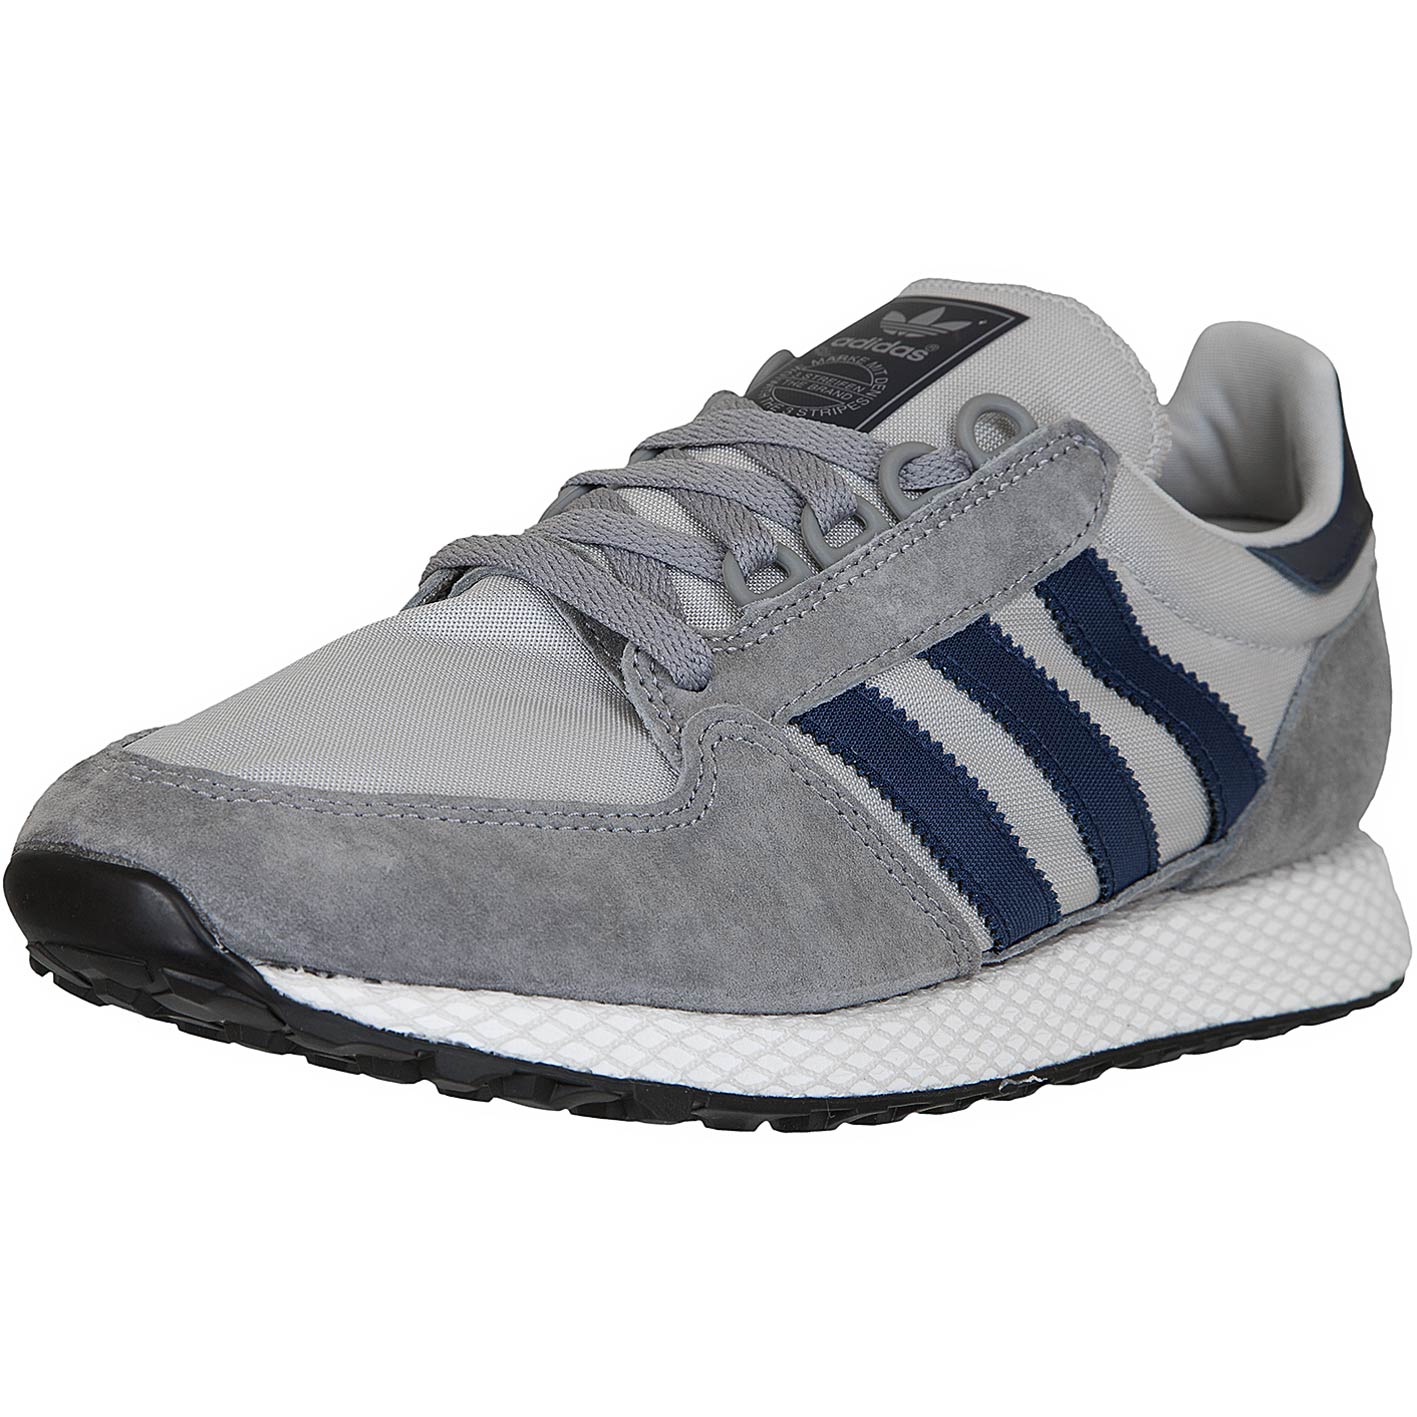 ☆ Adidas Originals Sneaker Forest Grove grau/dunkelblau - hier bestellen!